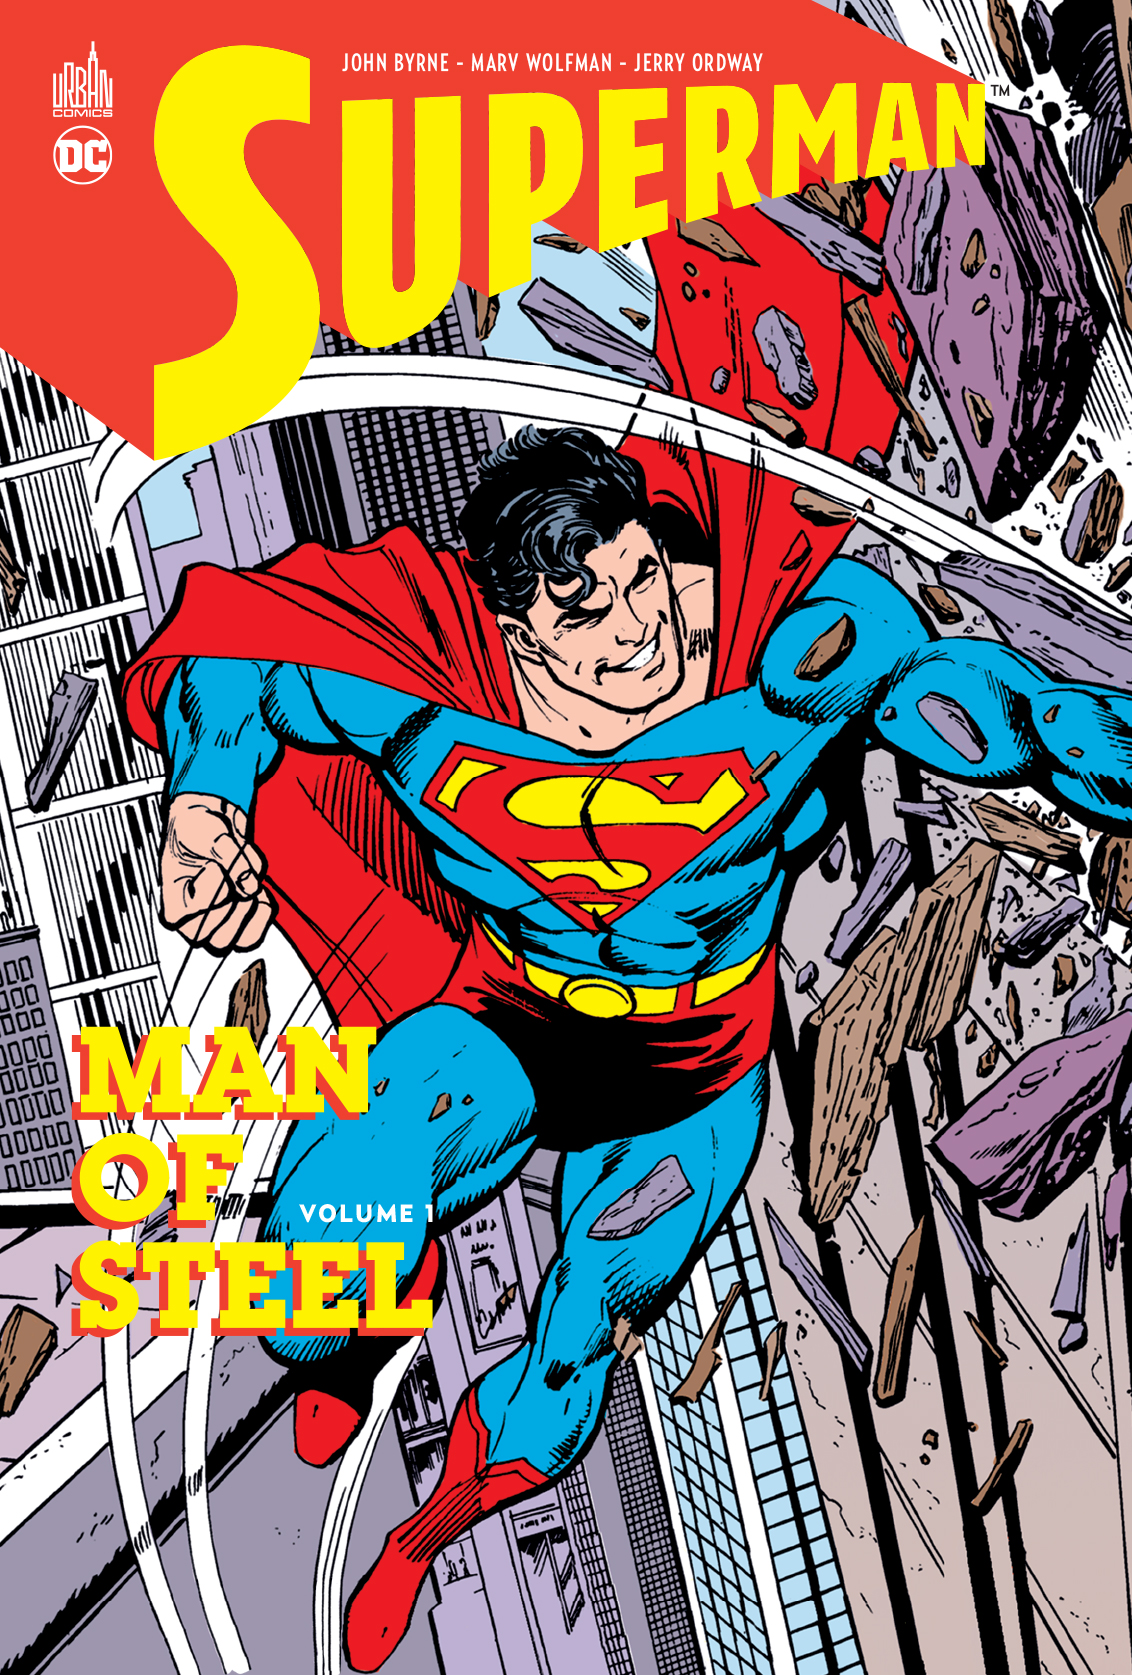 Man of Steel Tome 1 - John Byrne (Urban Comics)